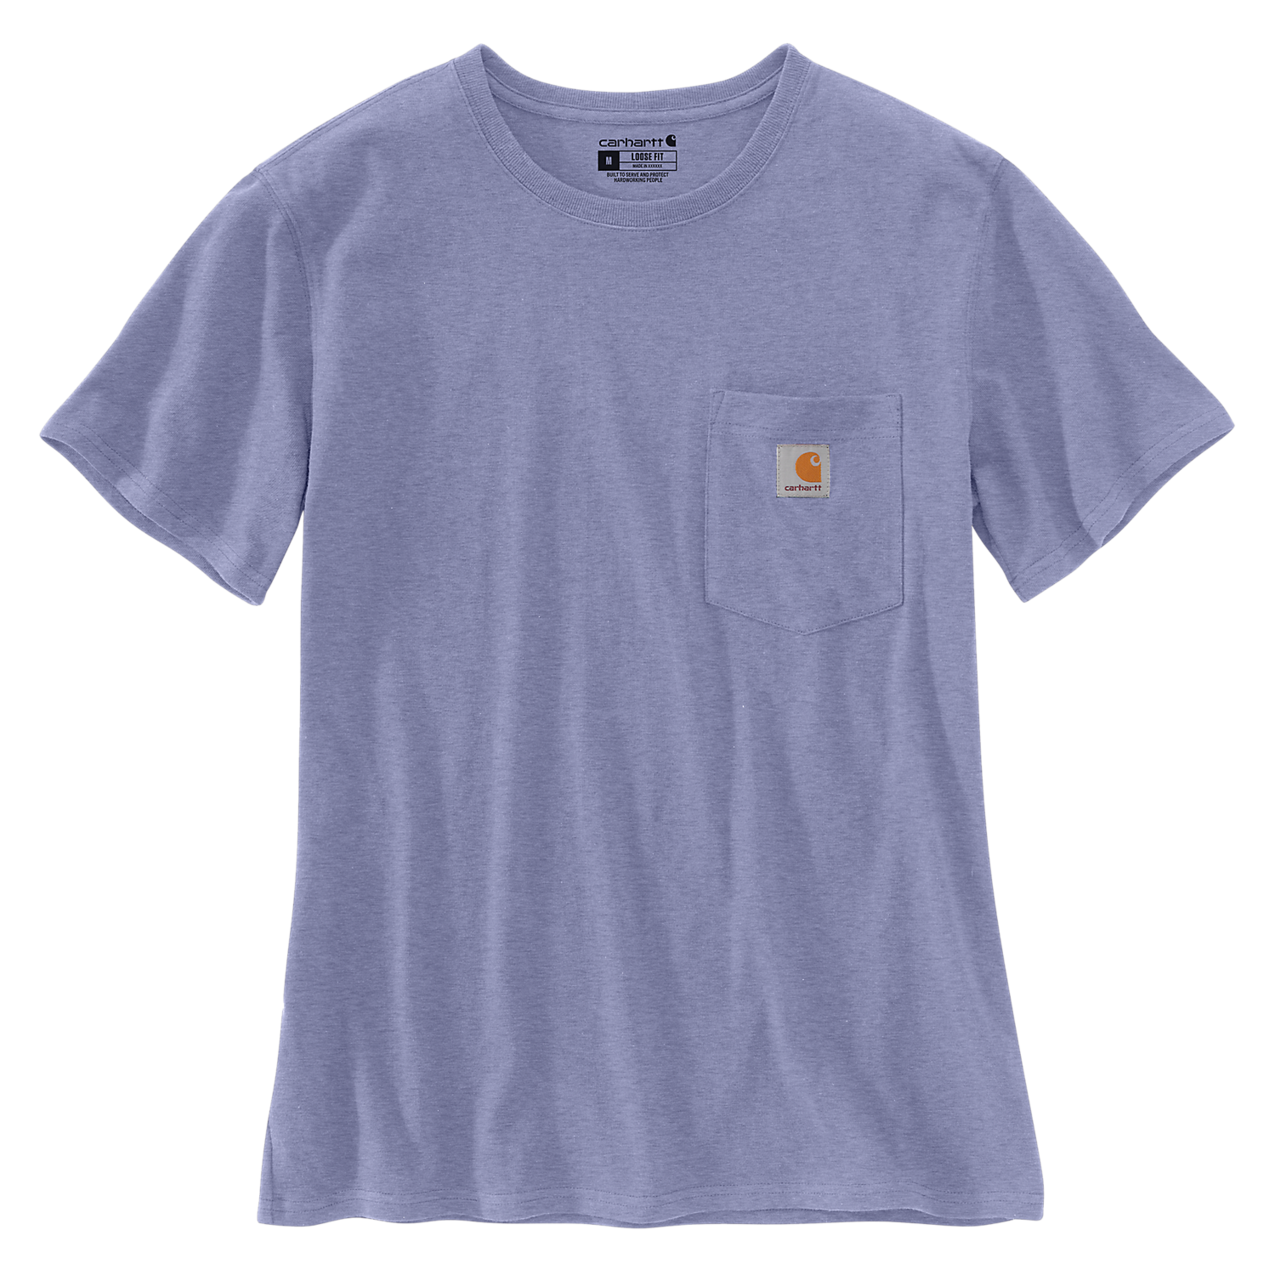 Carhartt Pocket Da. T-Shirt Soft Lavend 